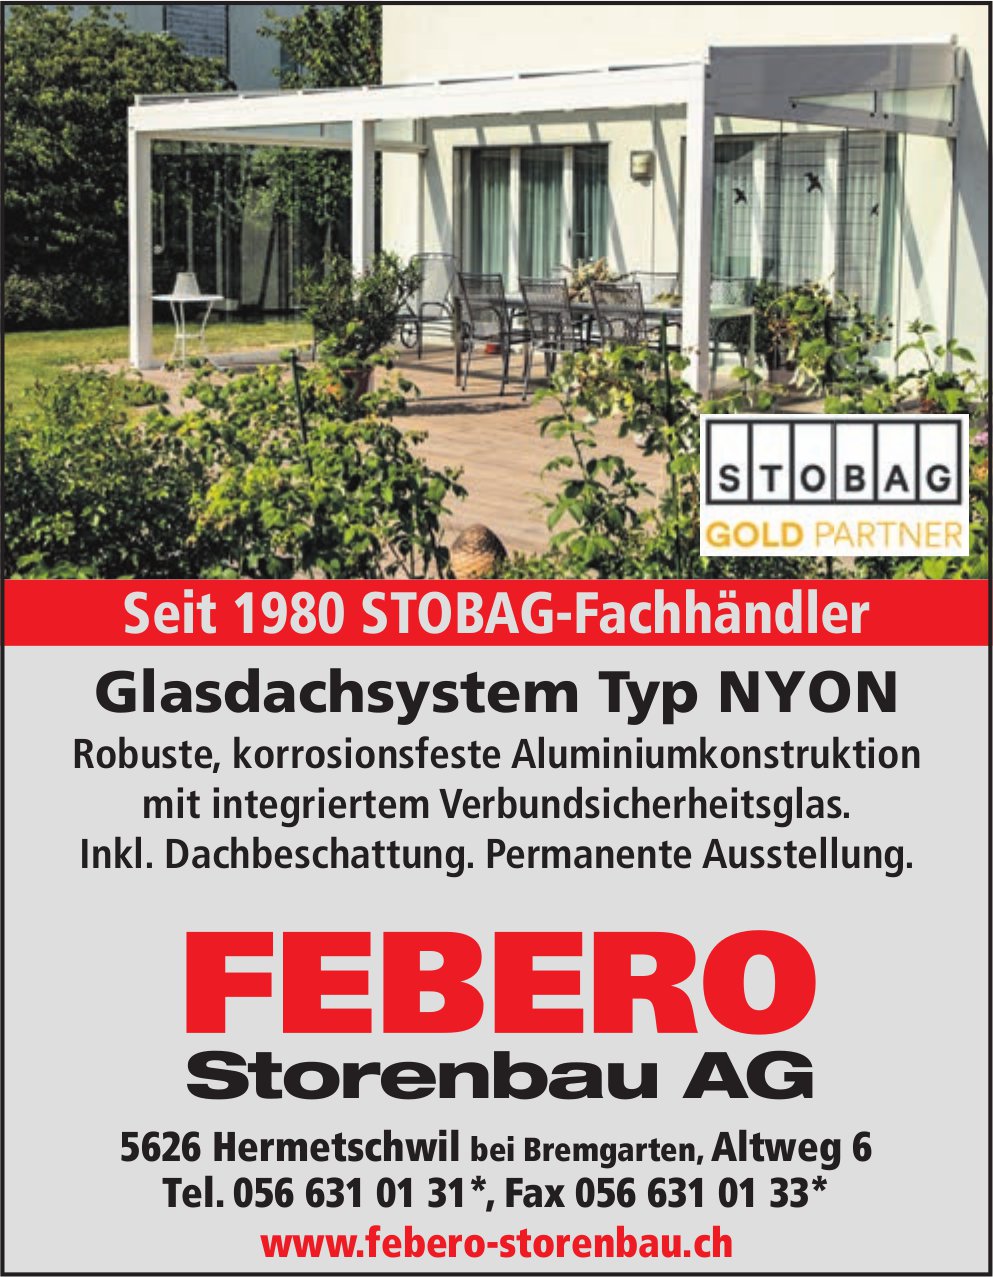 Febero Storenbau AG, Hermetschwil - Permanente Ausstellung.